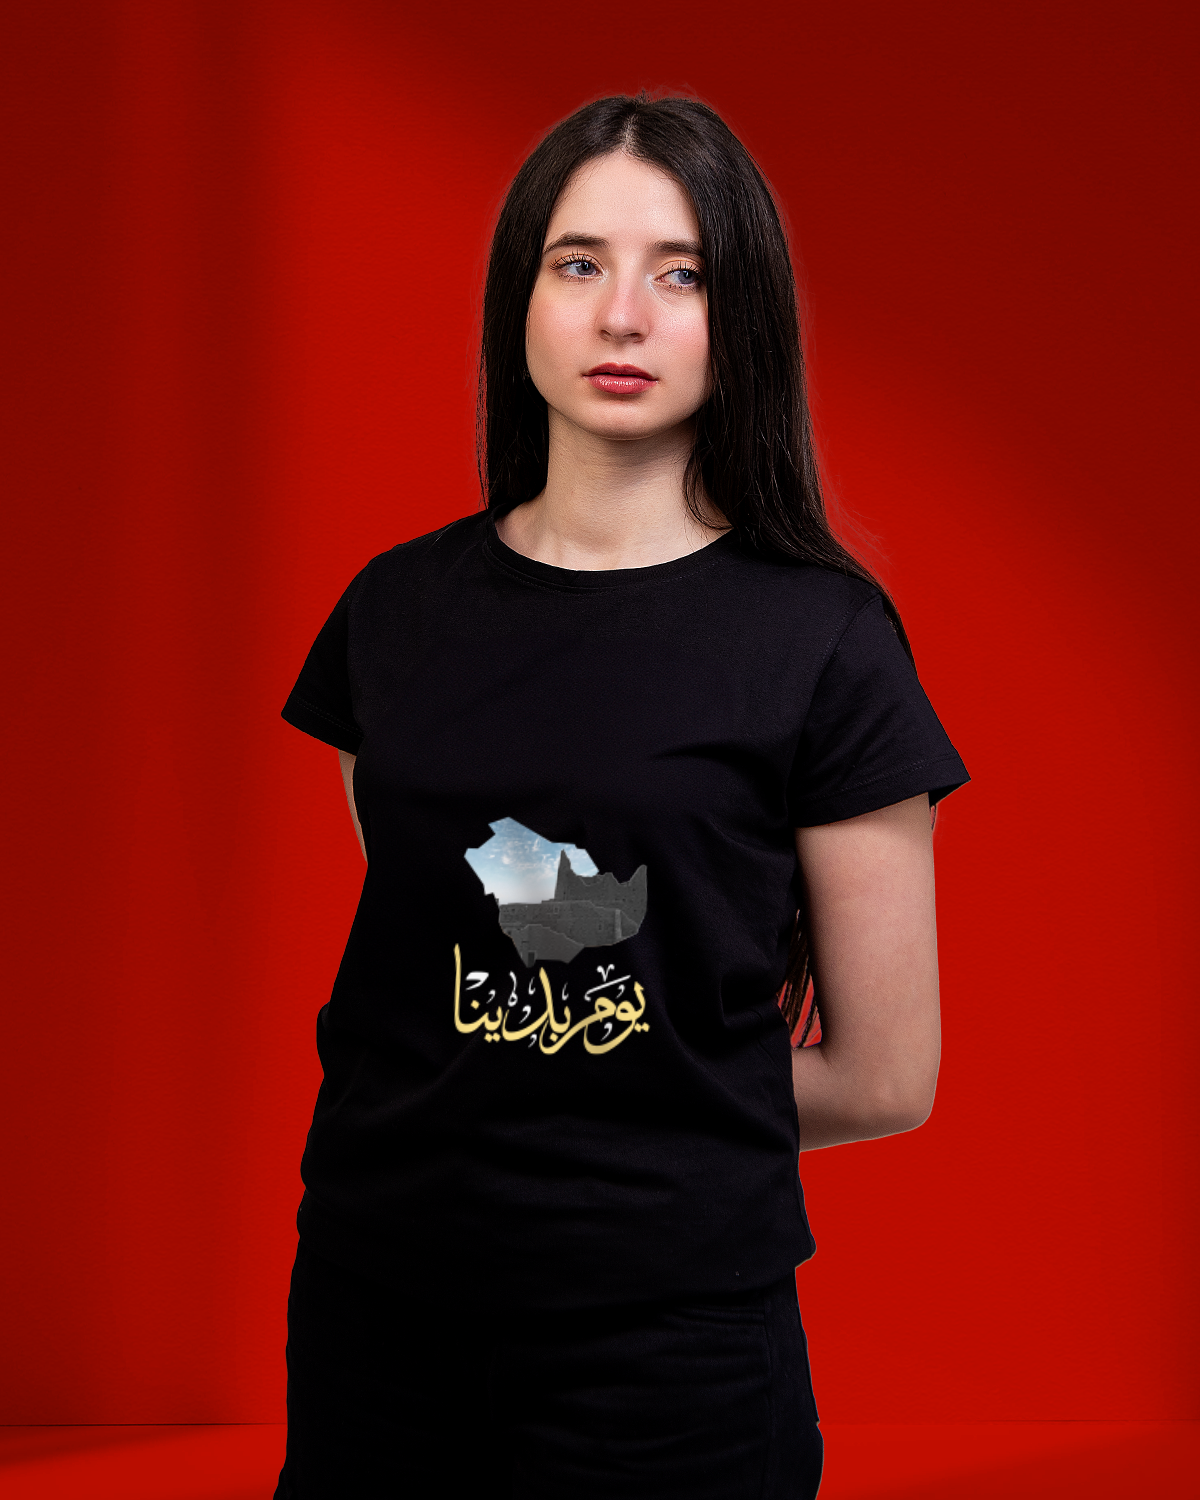 Women's Foundation Day T-shirt (Yawm Badina)